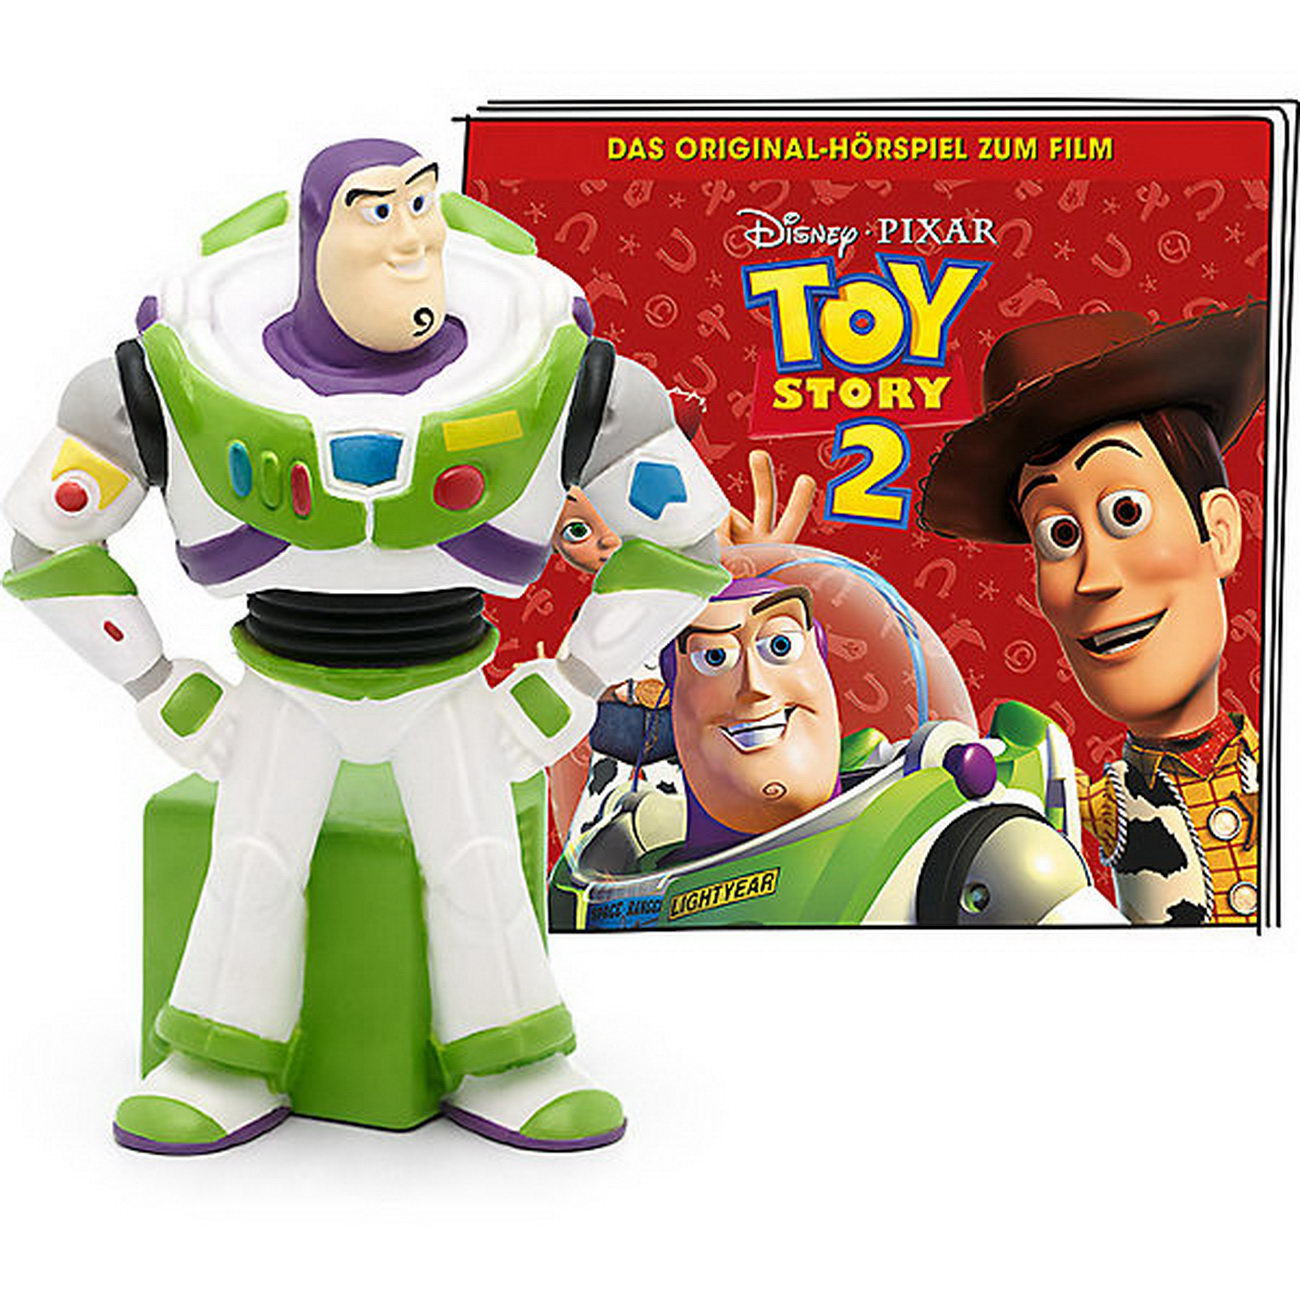 Tonies - Disney - Toy Story - Toy Story 2 - Hörspiel